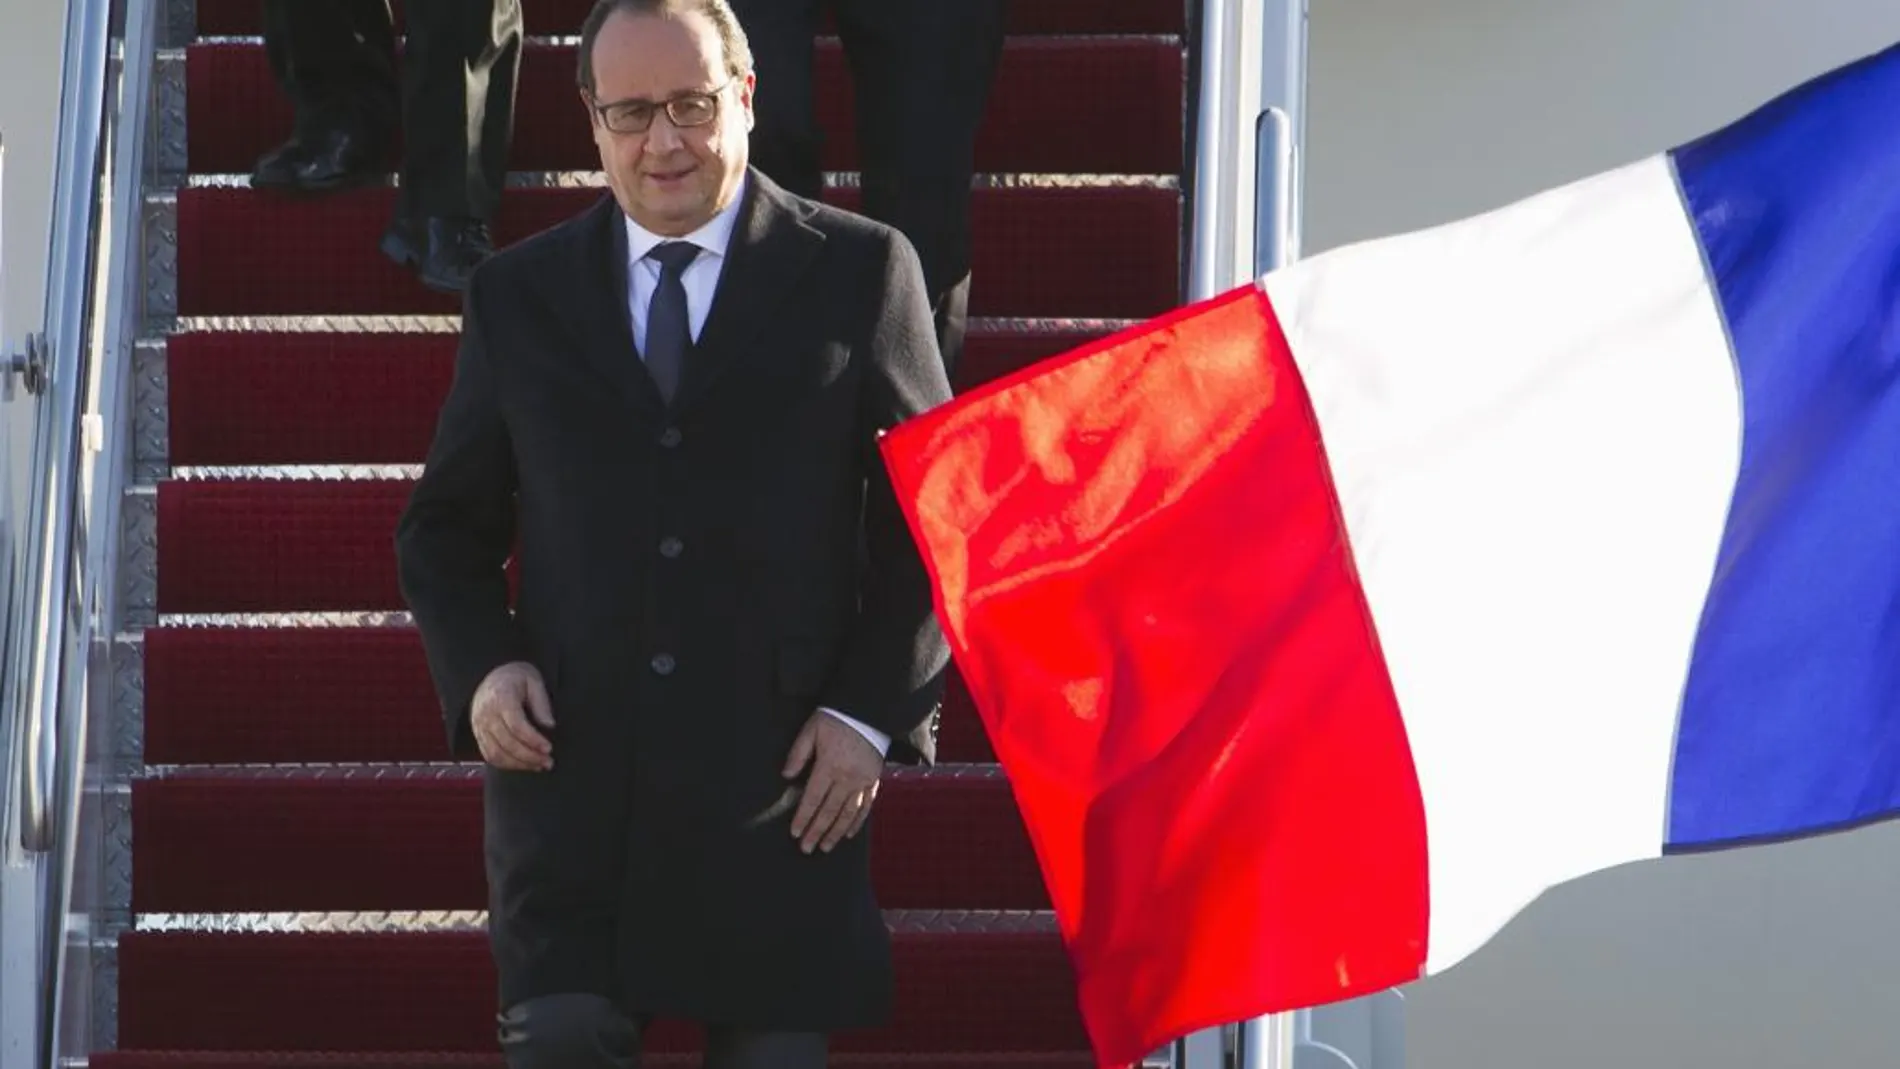 Los ataques del 13-N encumbran la popularidad de Hollande